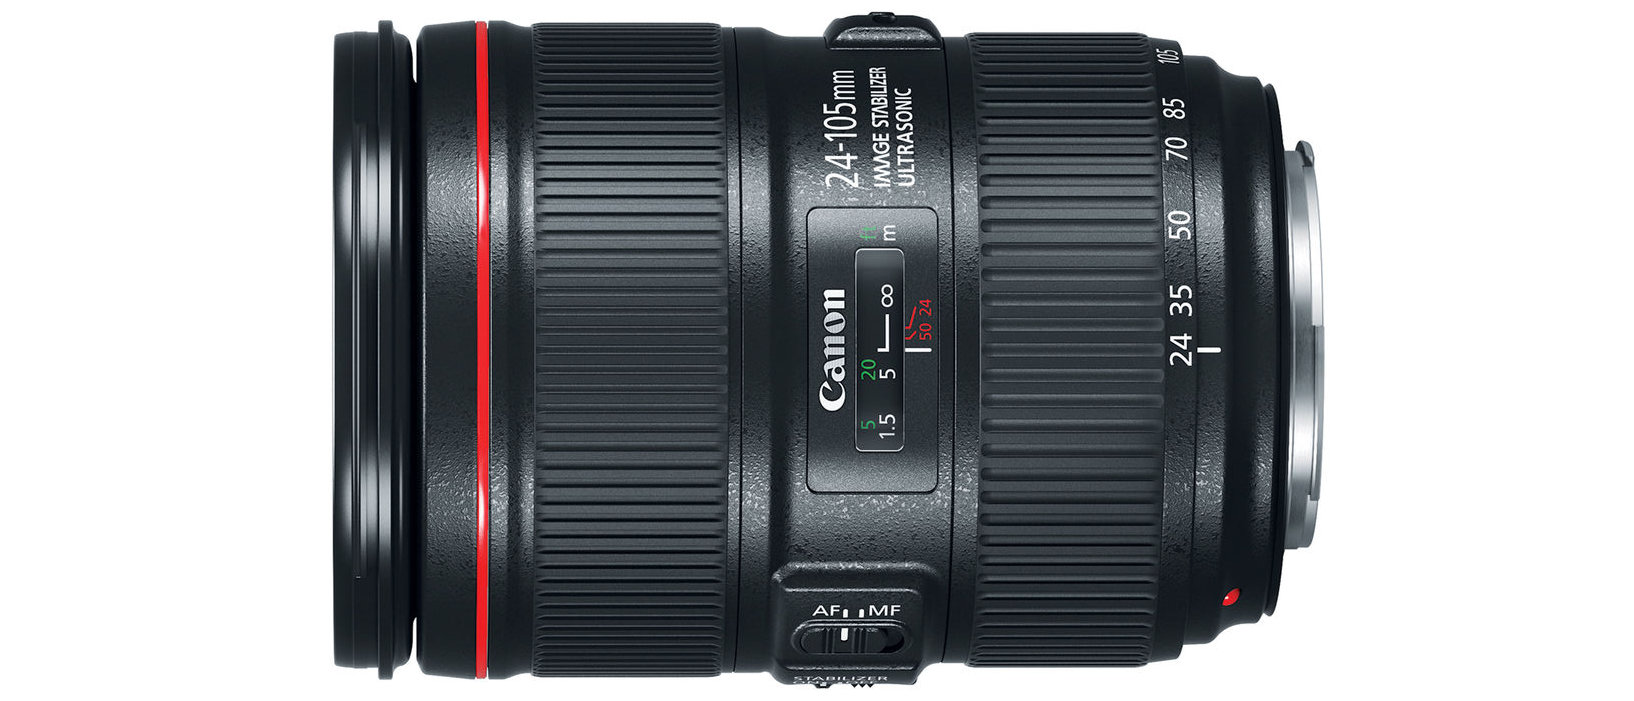 Canon EF 24-105mm f/4L IS II USM review | Digital Camera World